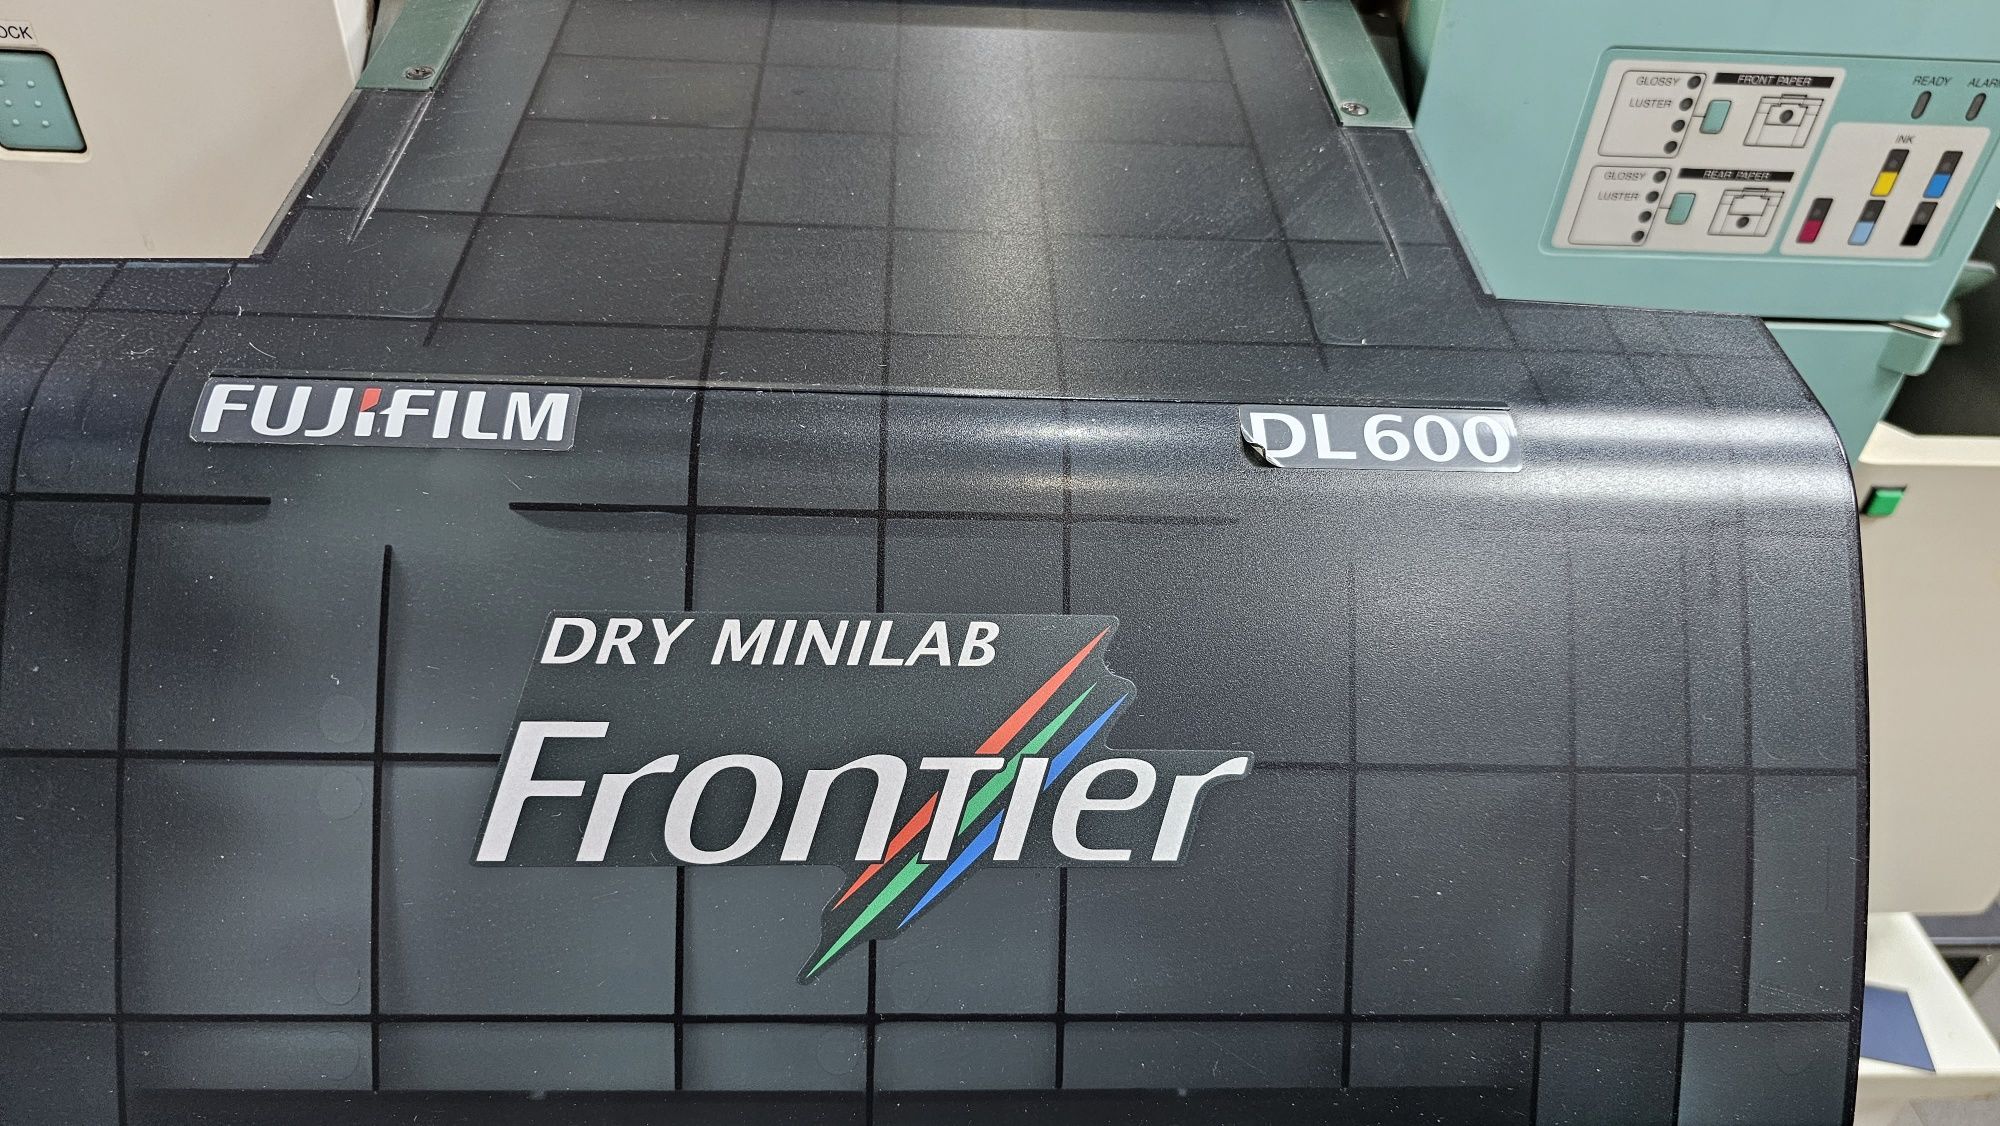 FUJIFILM DL 600,DRY minilab frontier